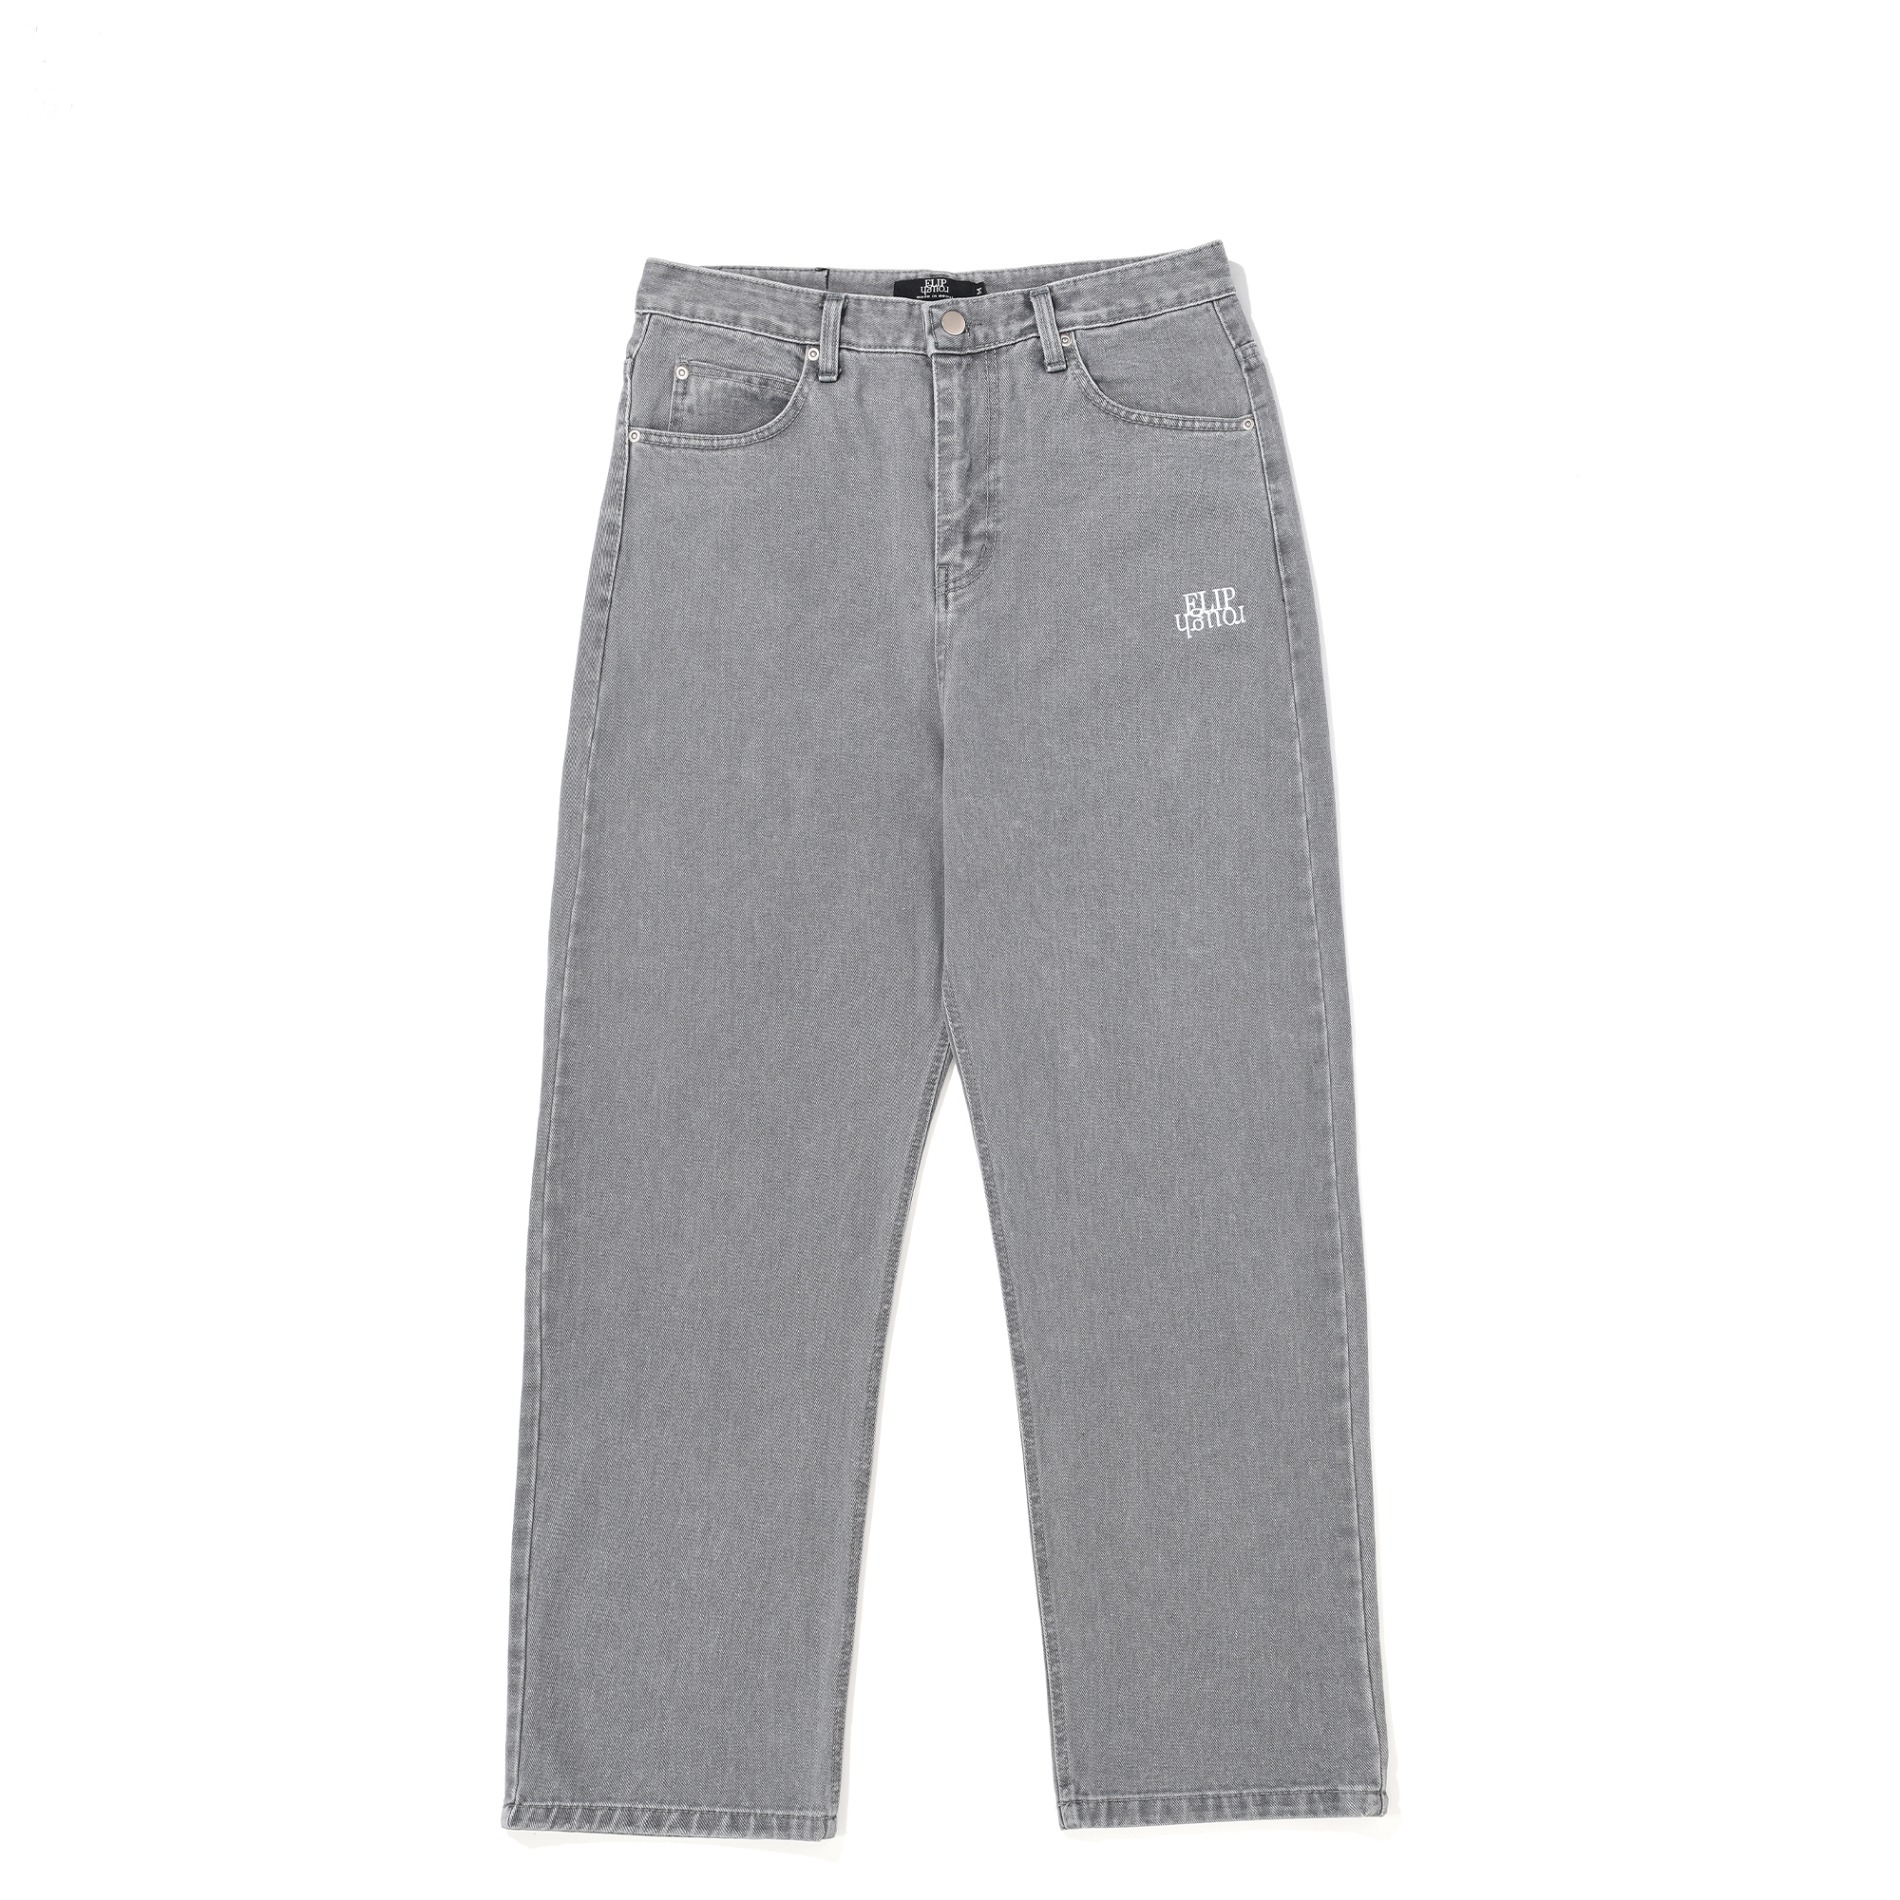 FLIPROUGH Work Pants - Gray